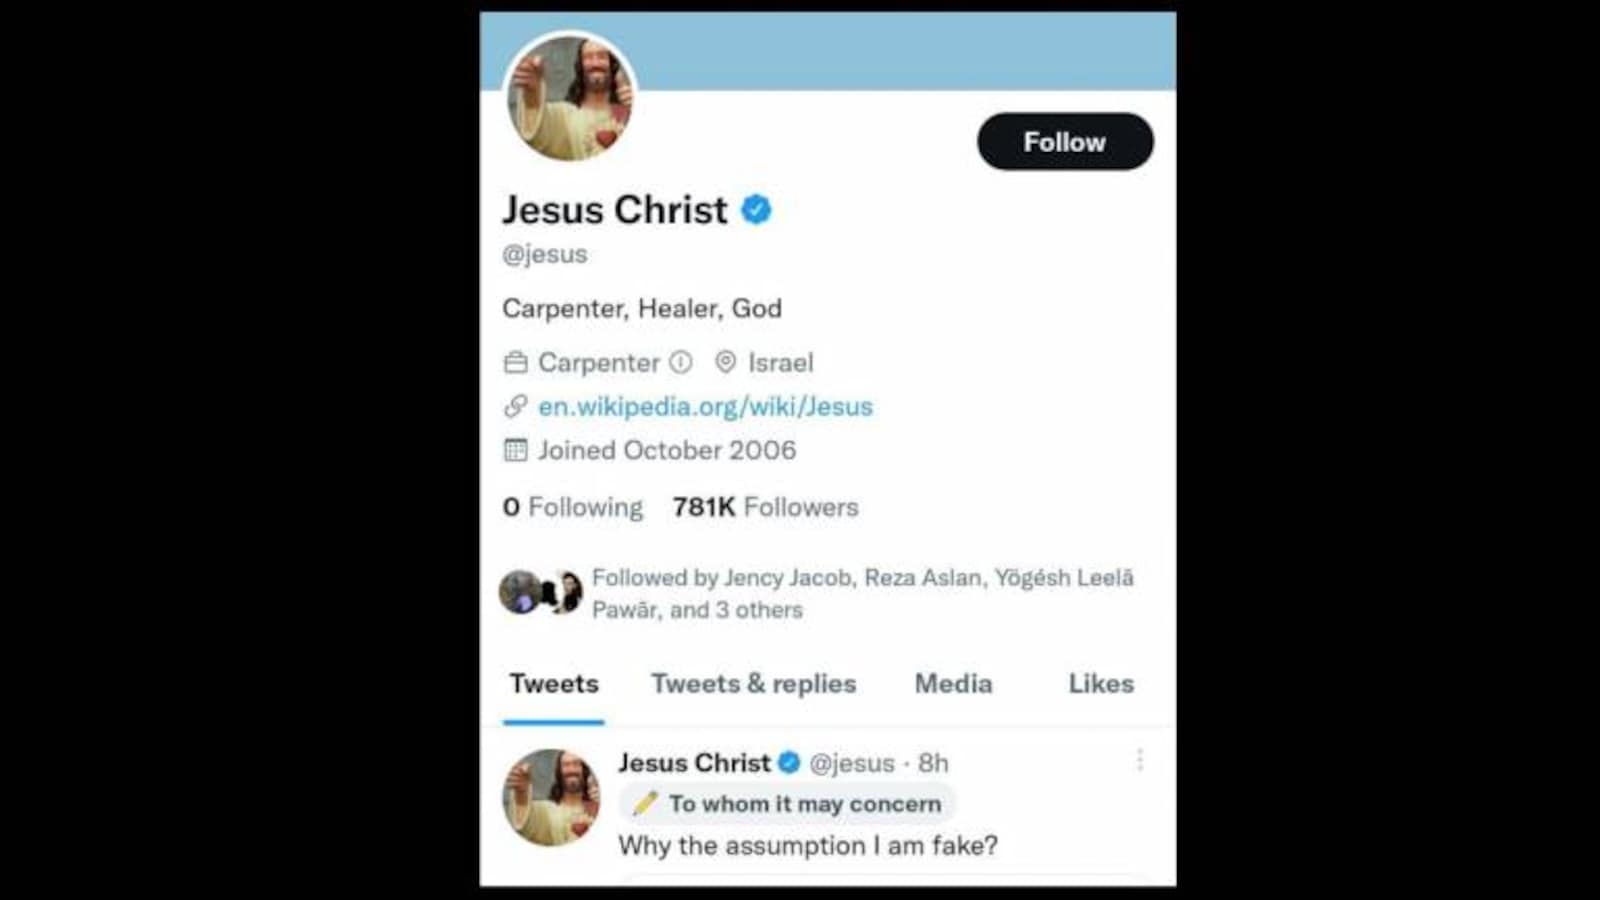 Jesus Christ' is now verified on Twitter. His bio says 'Carpenter, Healer,  God'